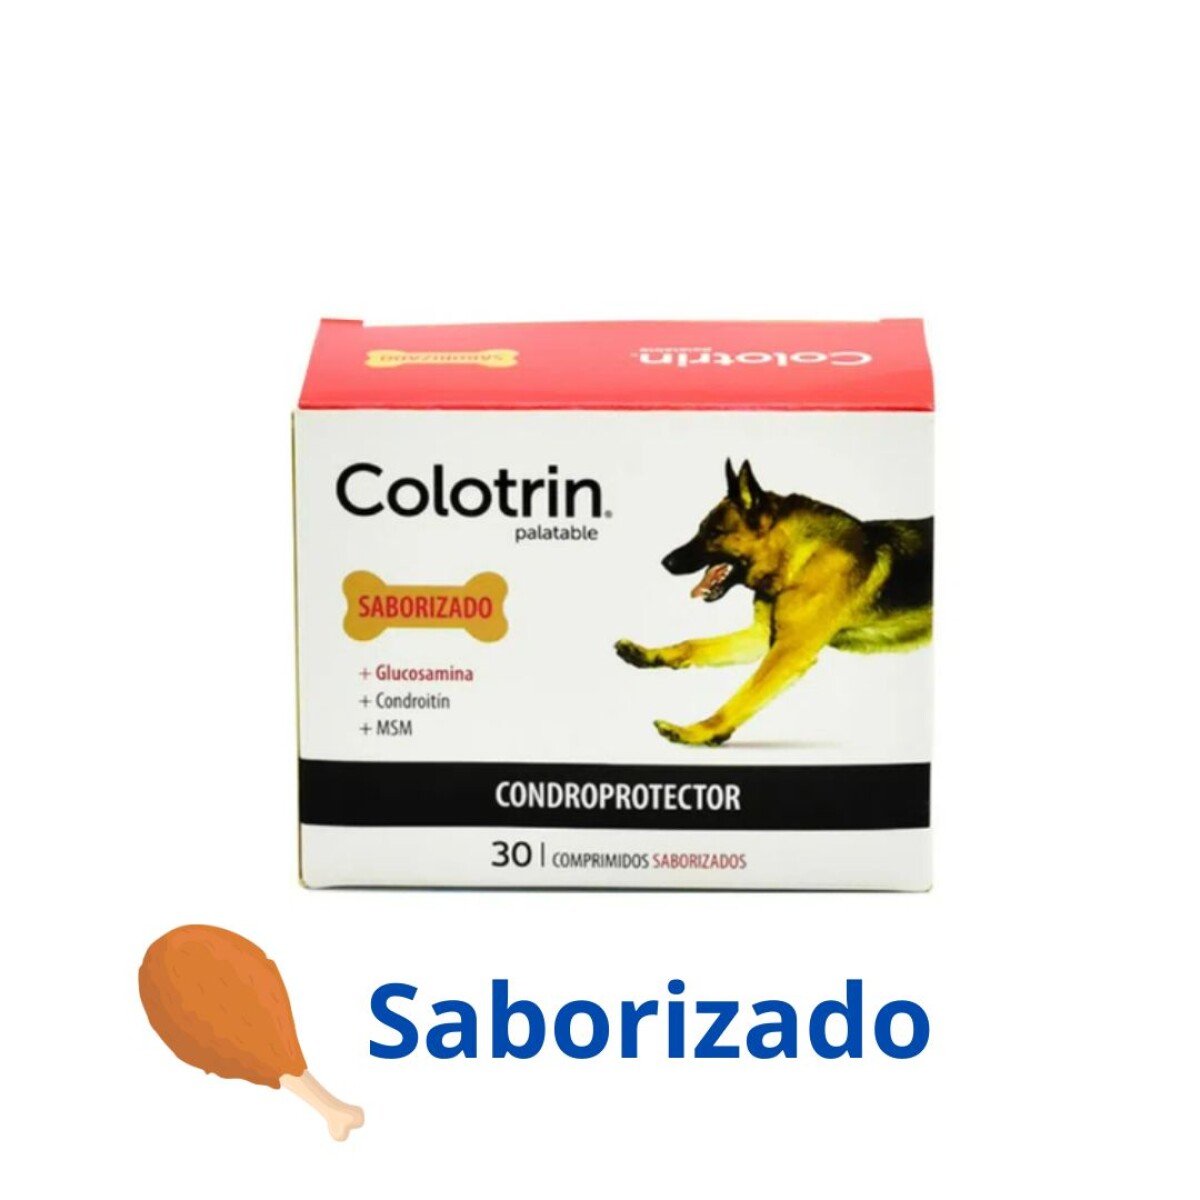 Colotrin Palatable Jm * 30 Comprimidos 